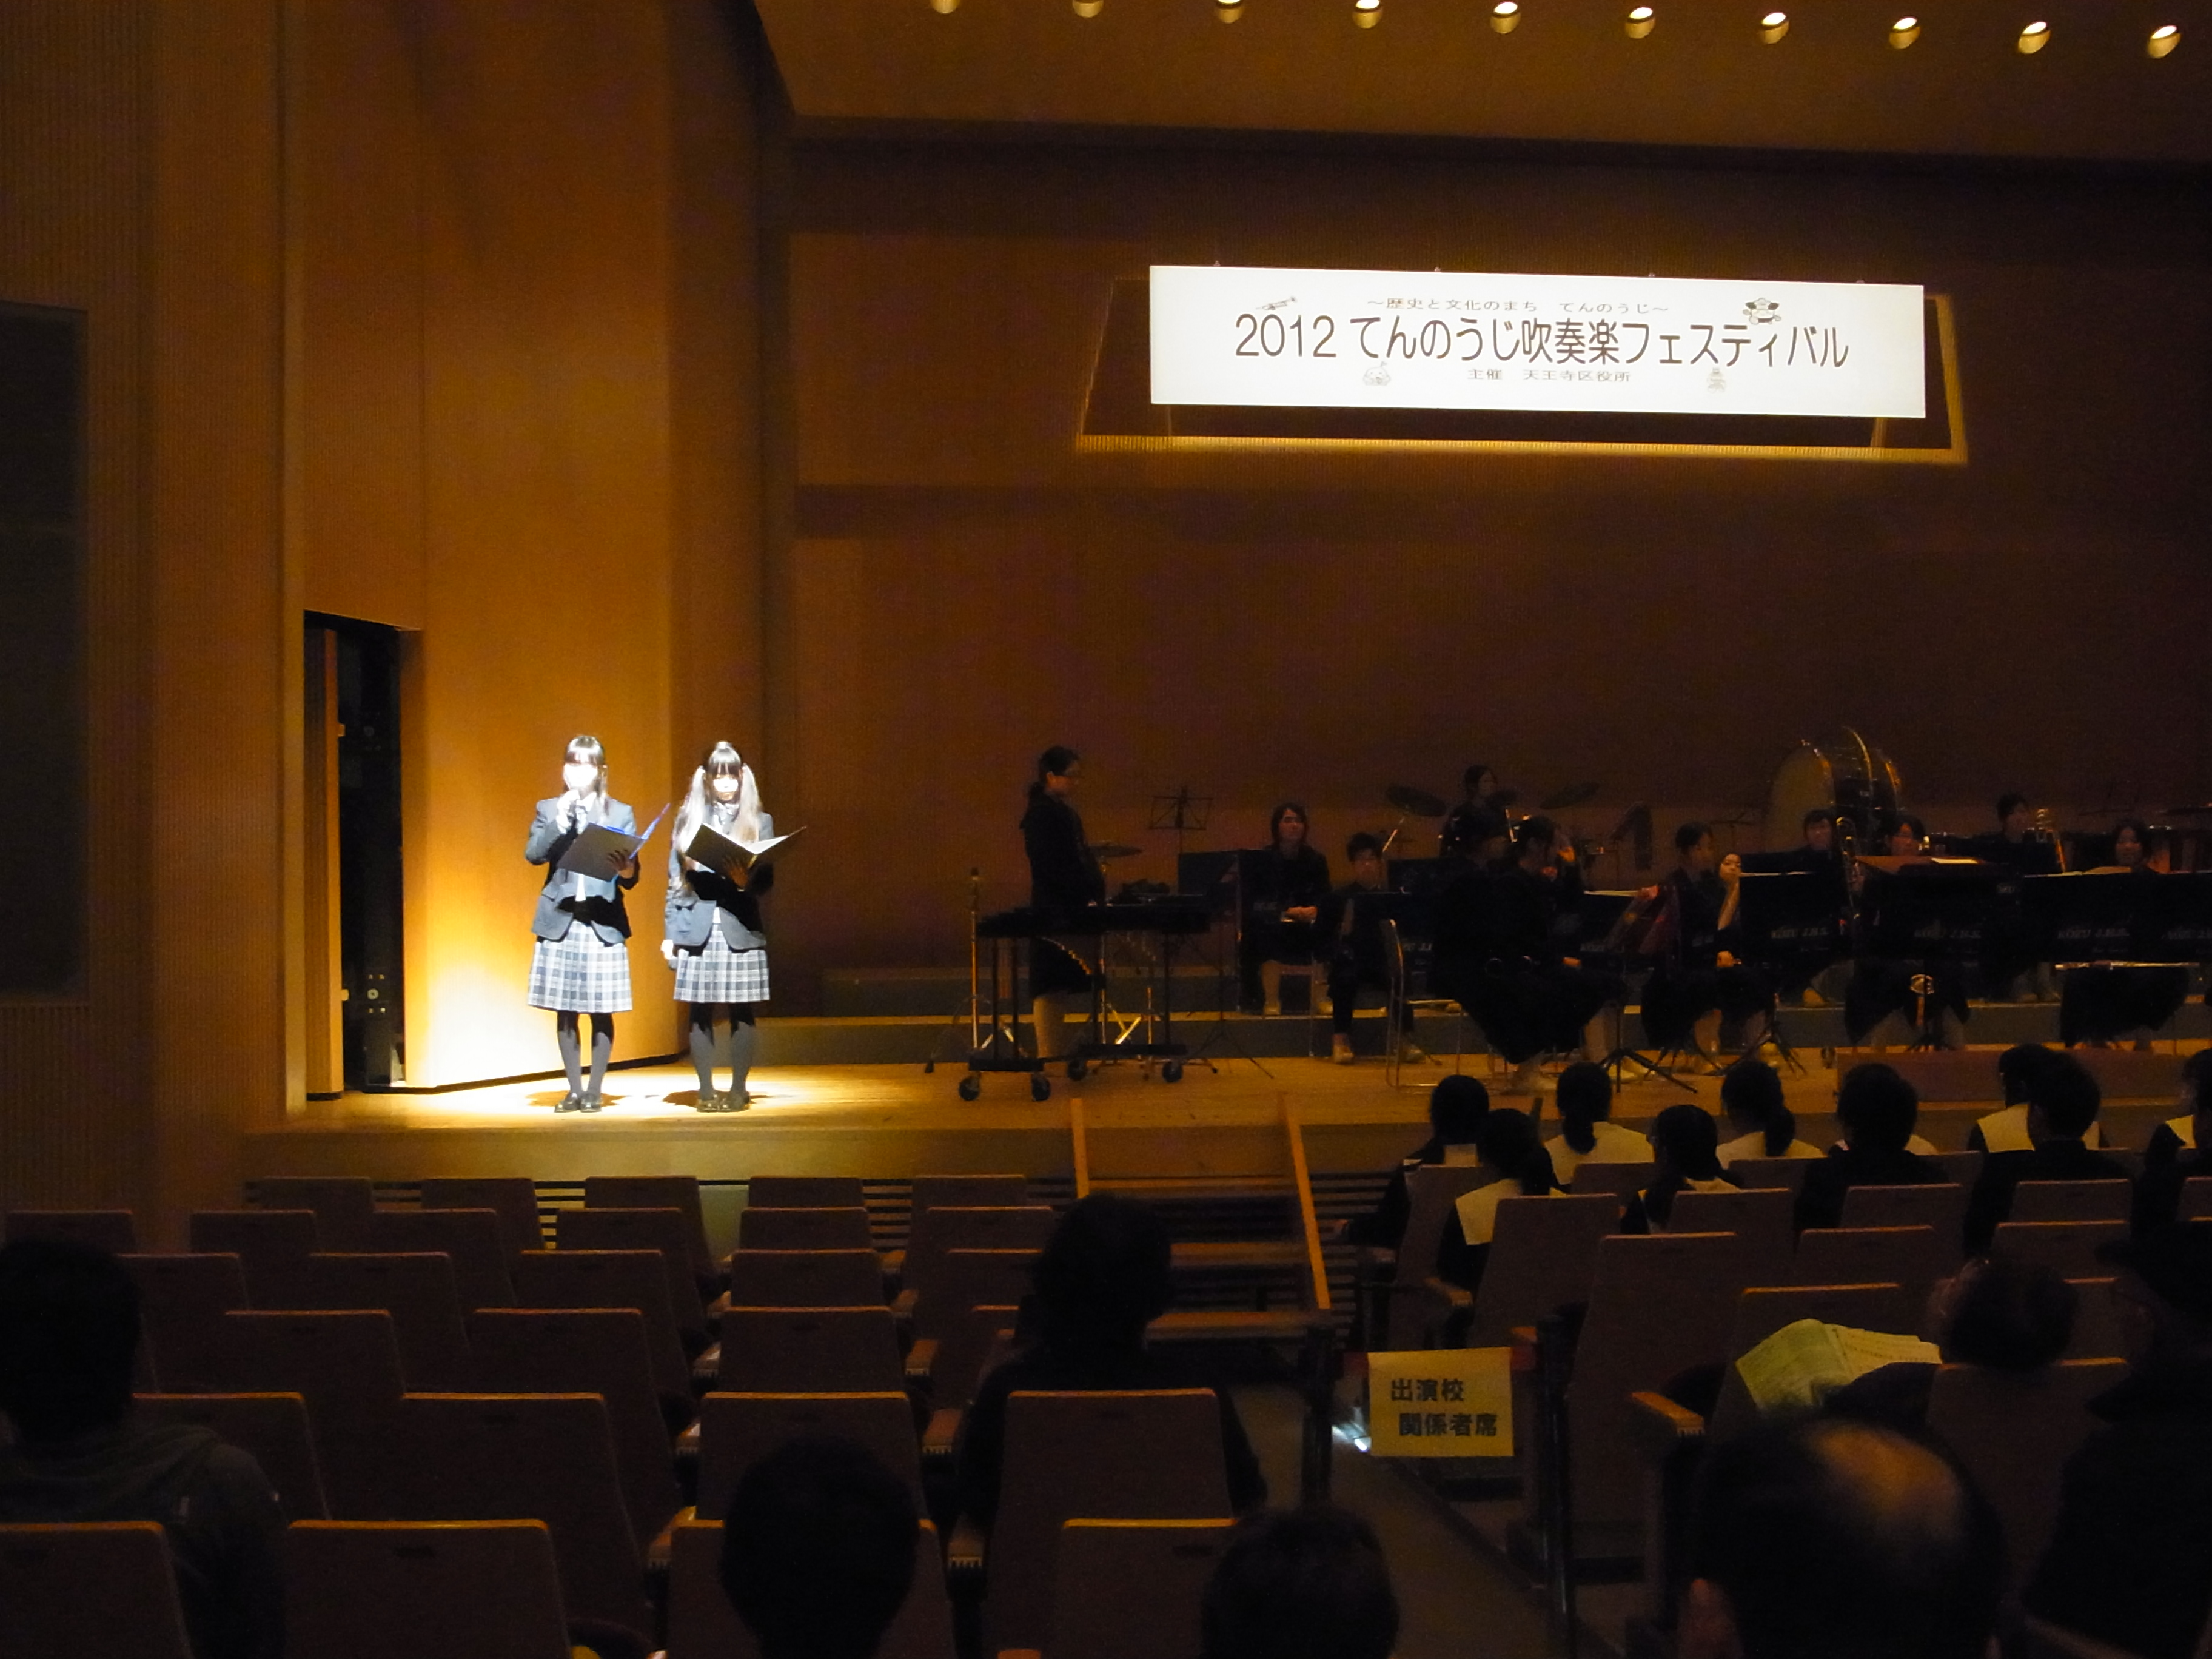 http://www.oyg.ed.jp/campus/club/report/2013/01/13/images/RIMG0317.JPG